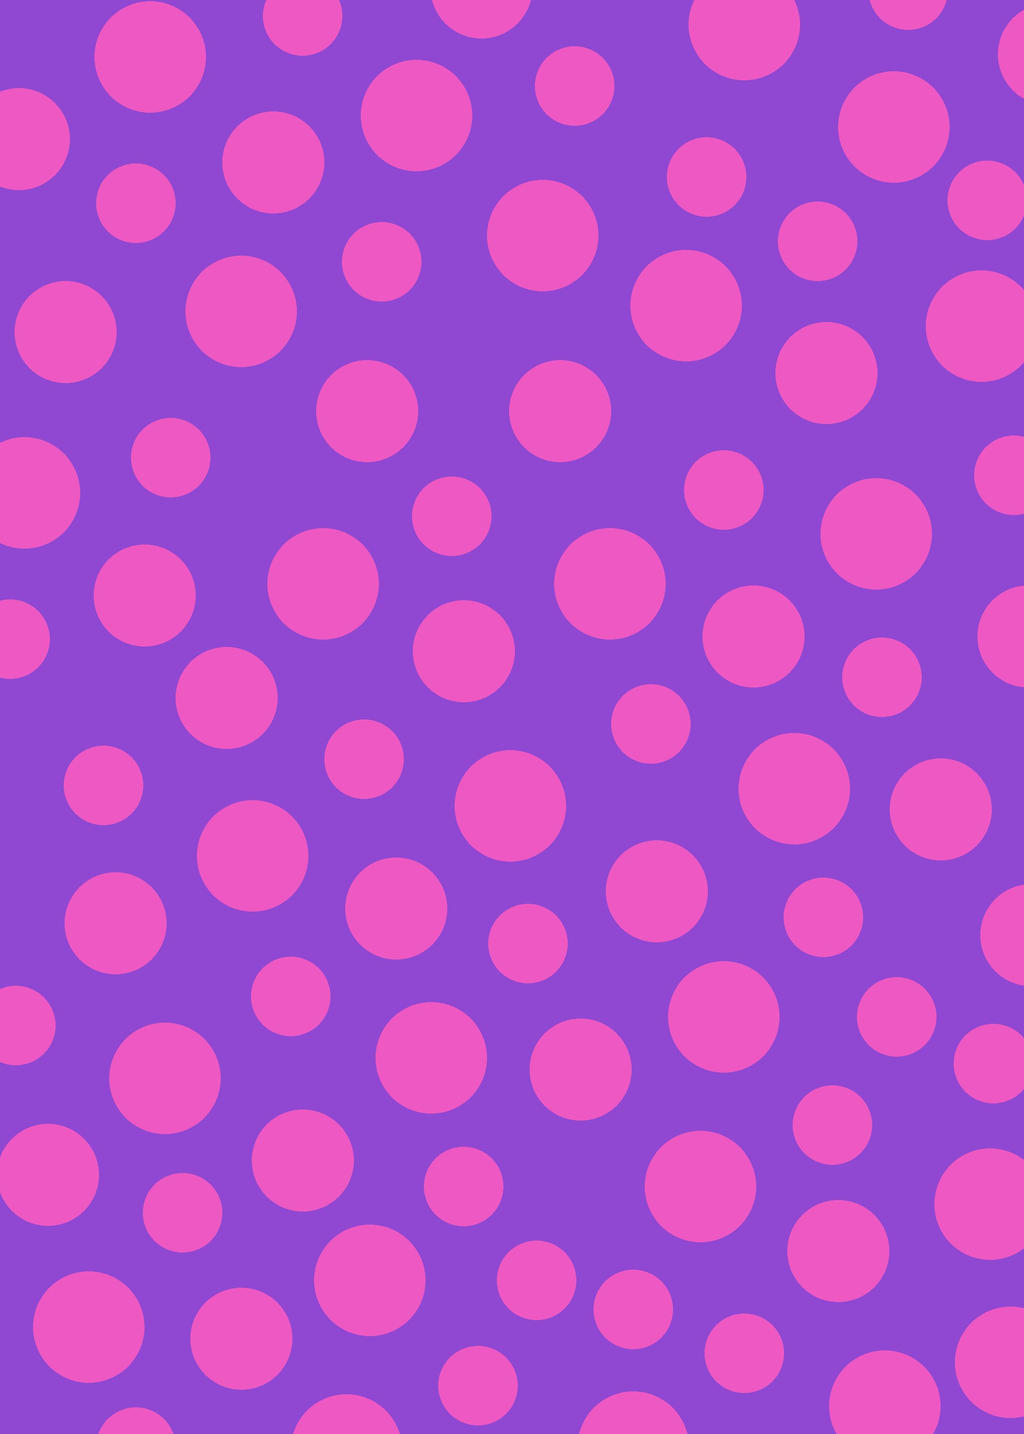 Polka Dot Texture 4